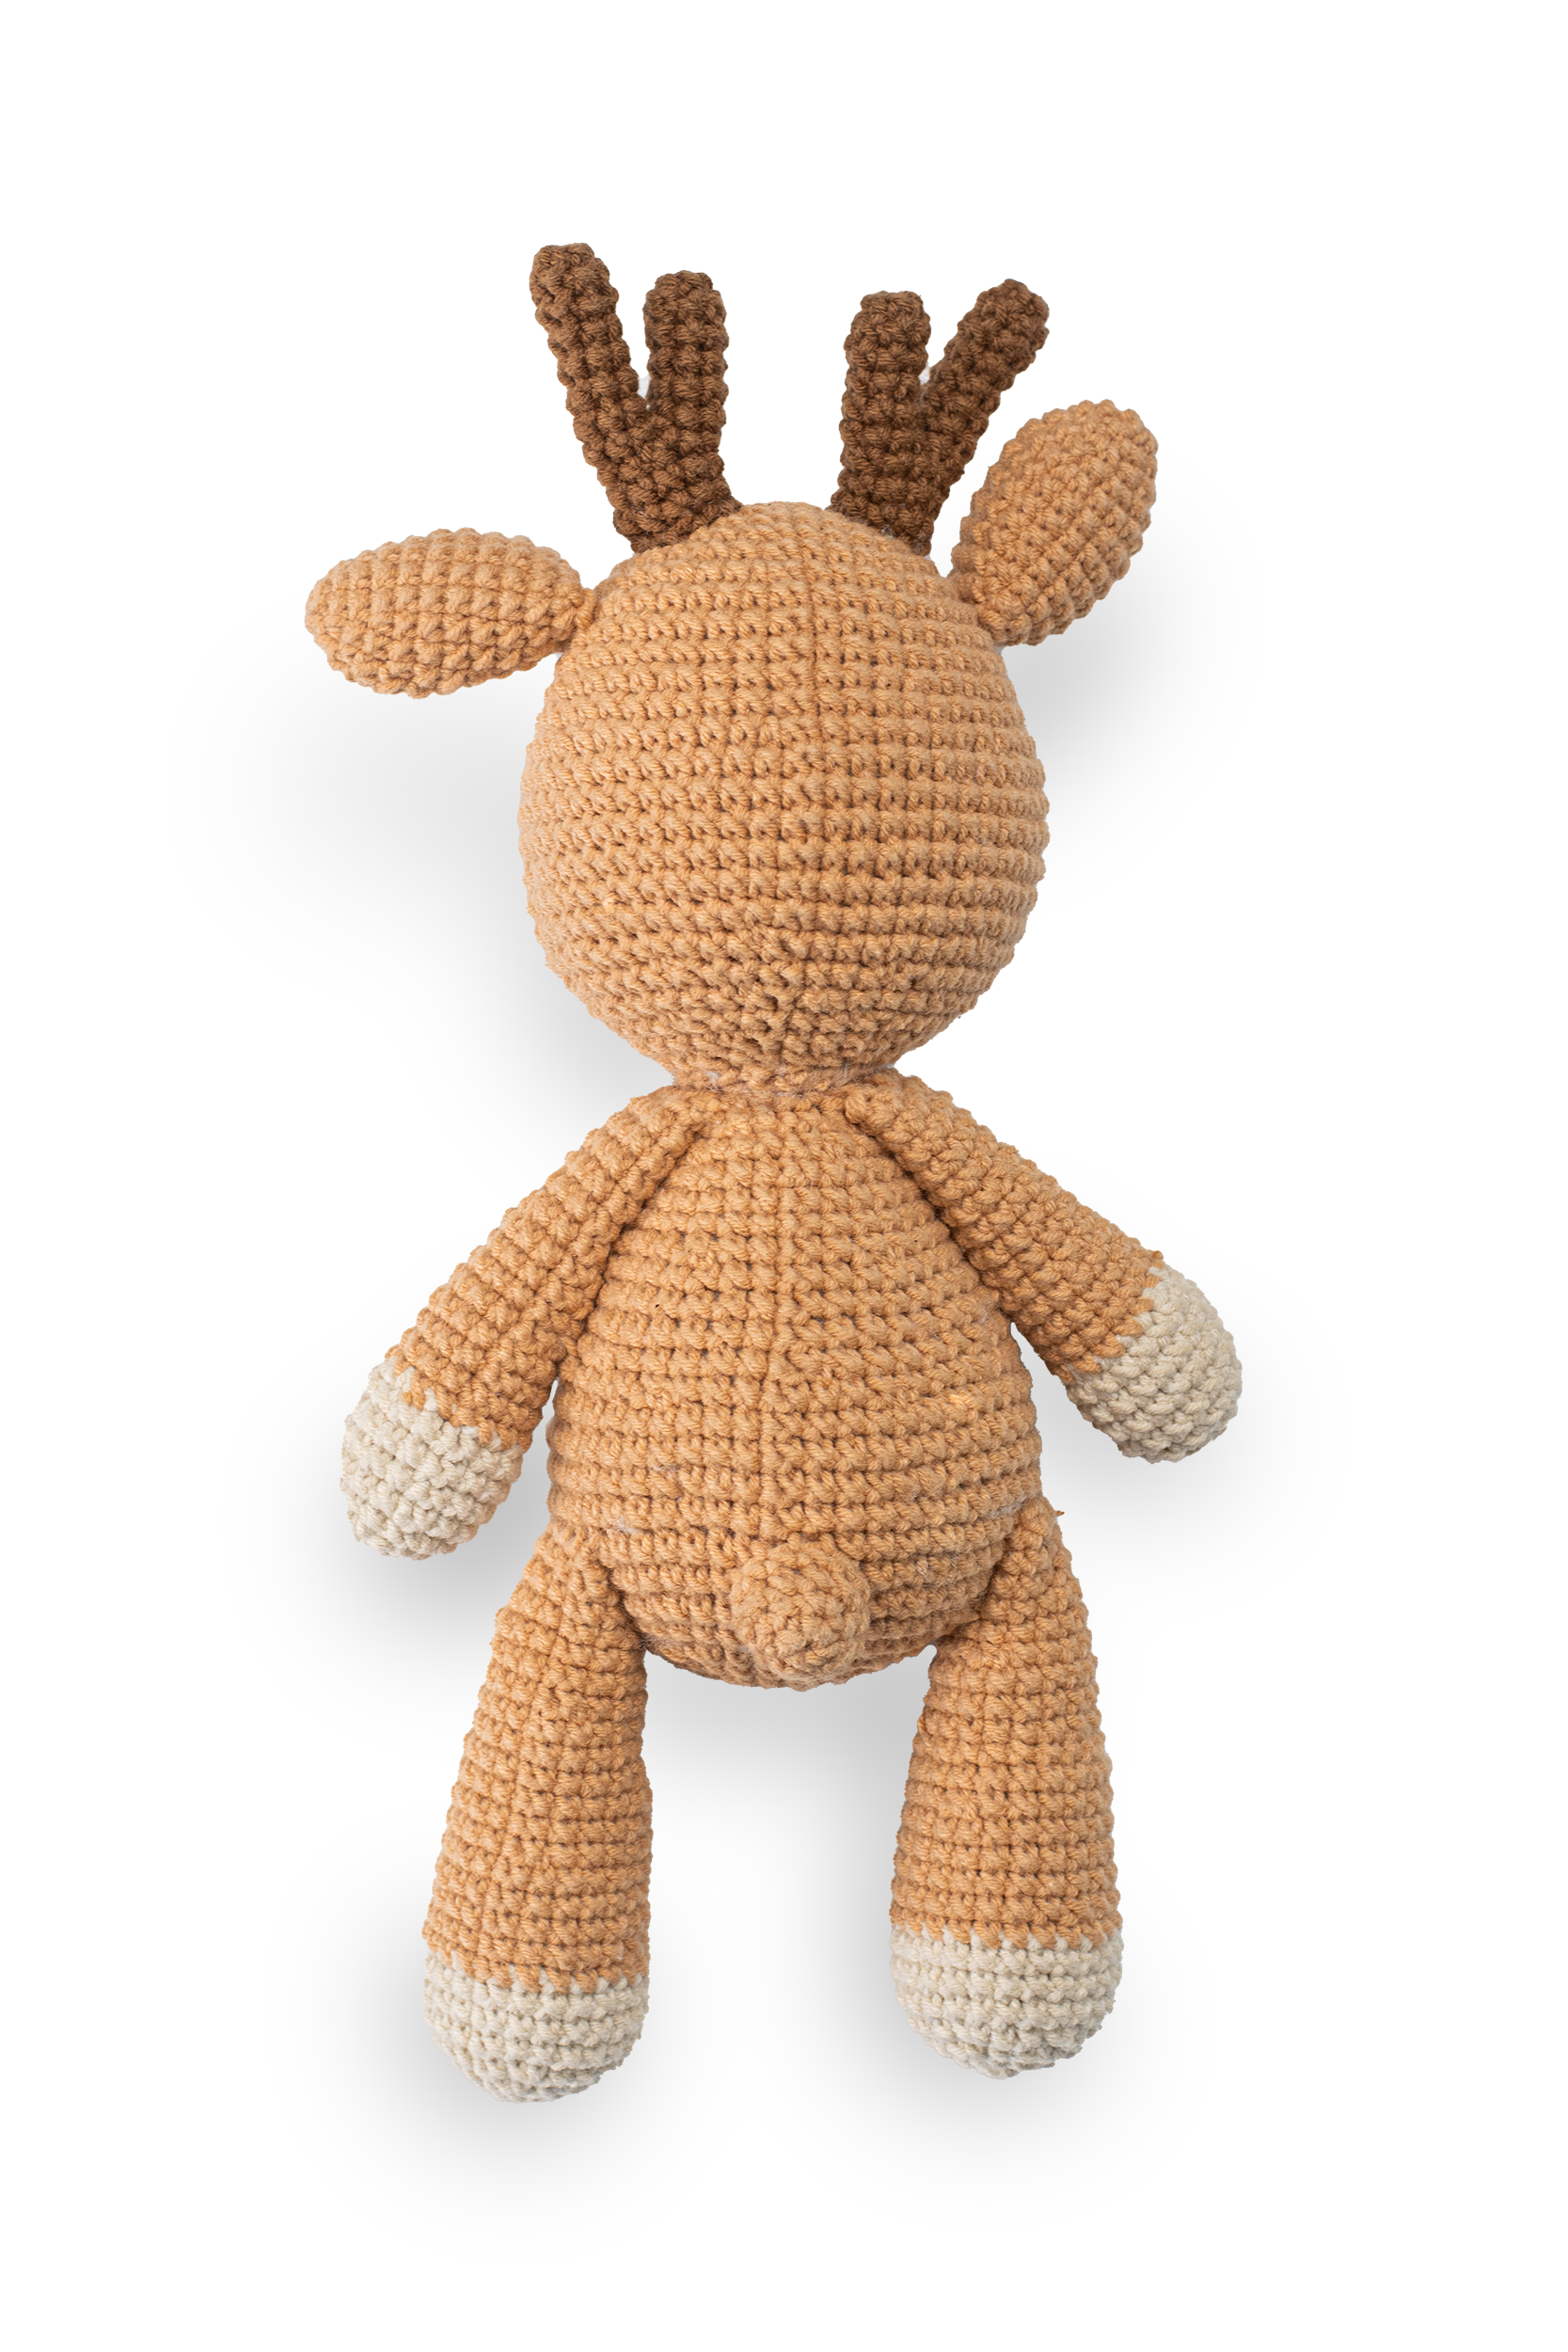 Handmade Deer Toy - Knitted Friends